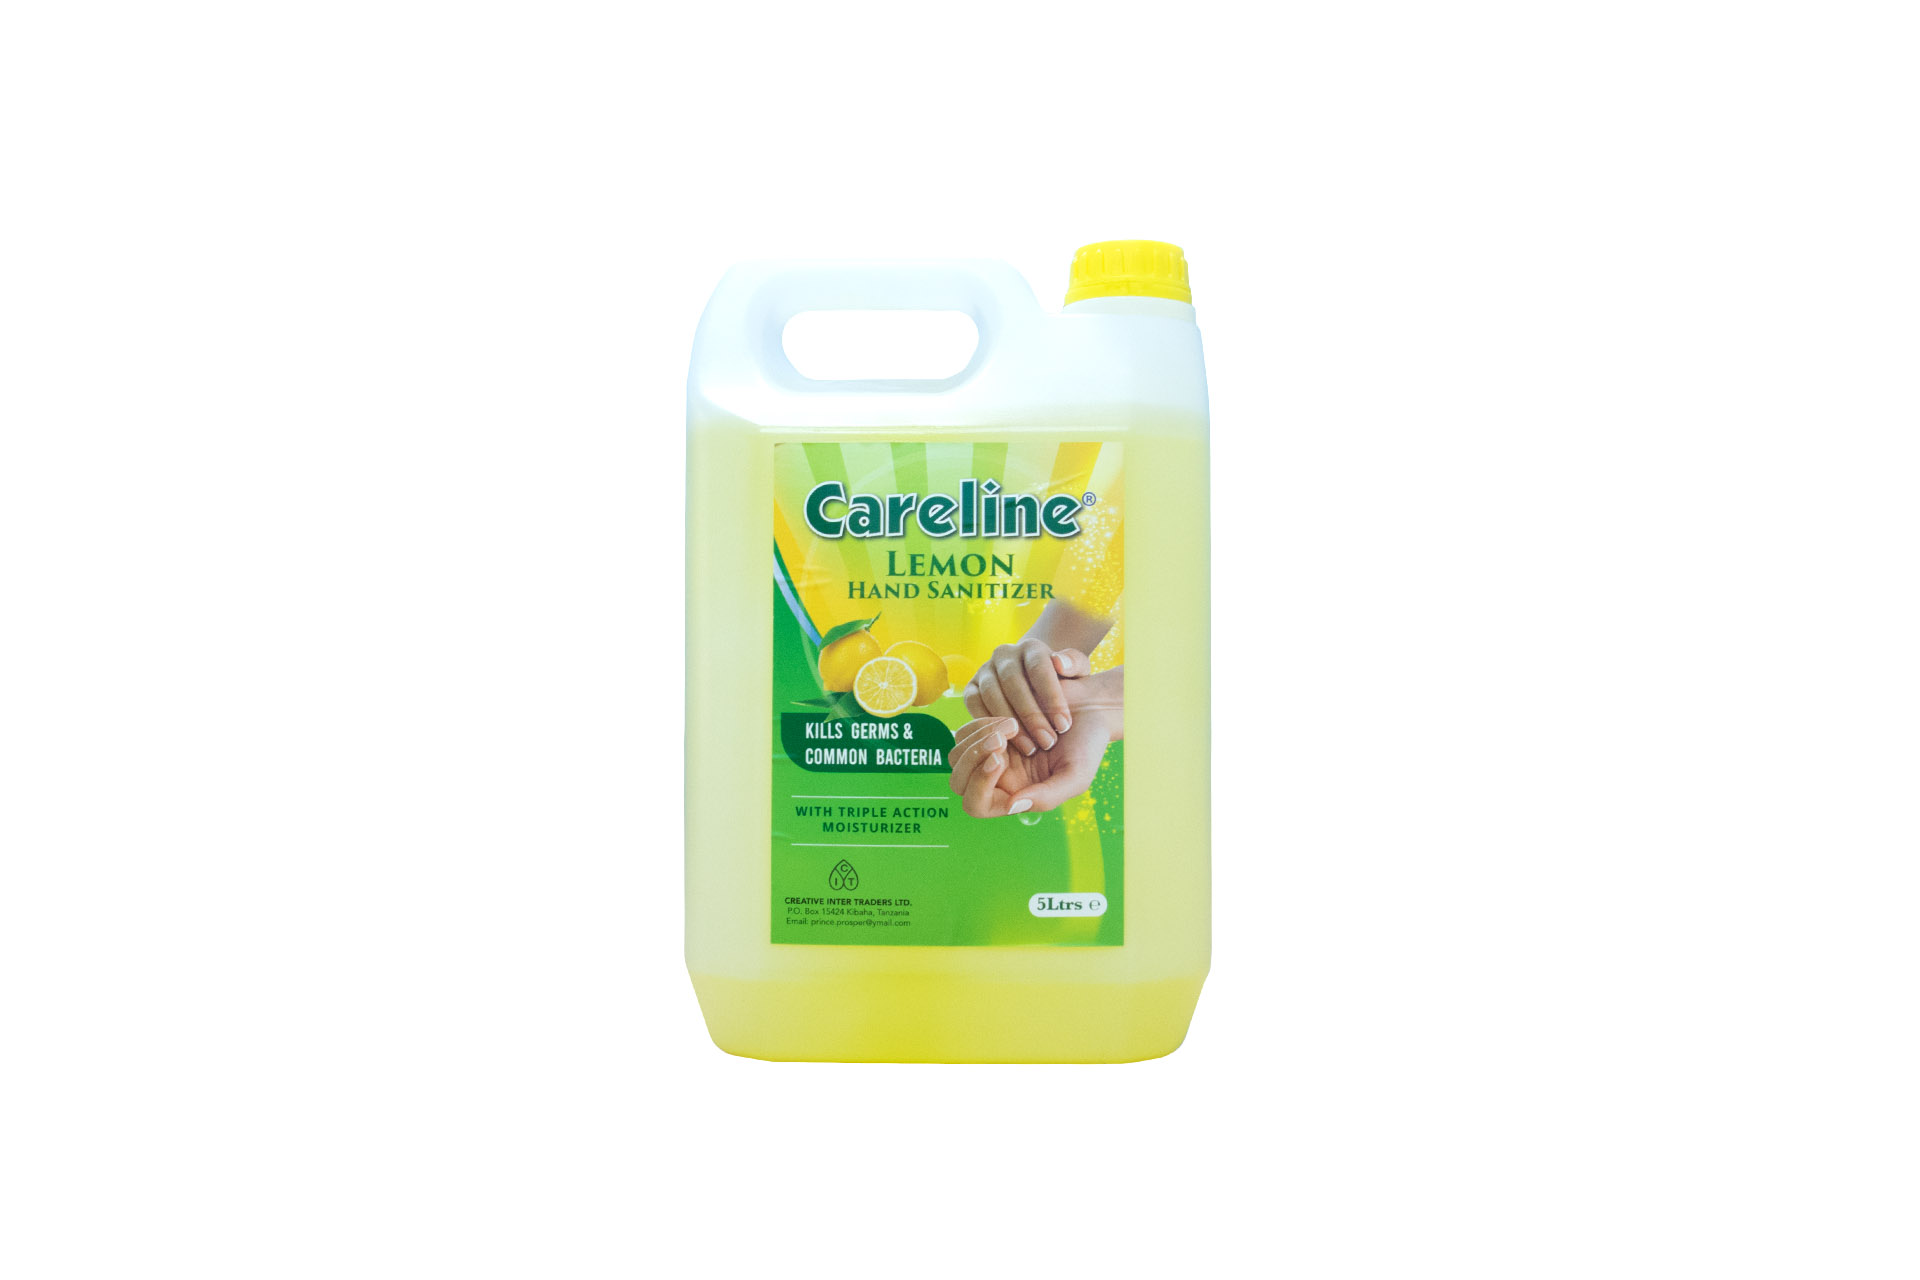 Careline – Lemon Sanitizer